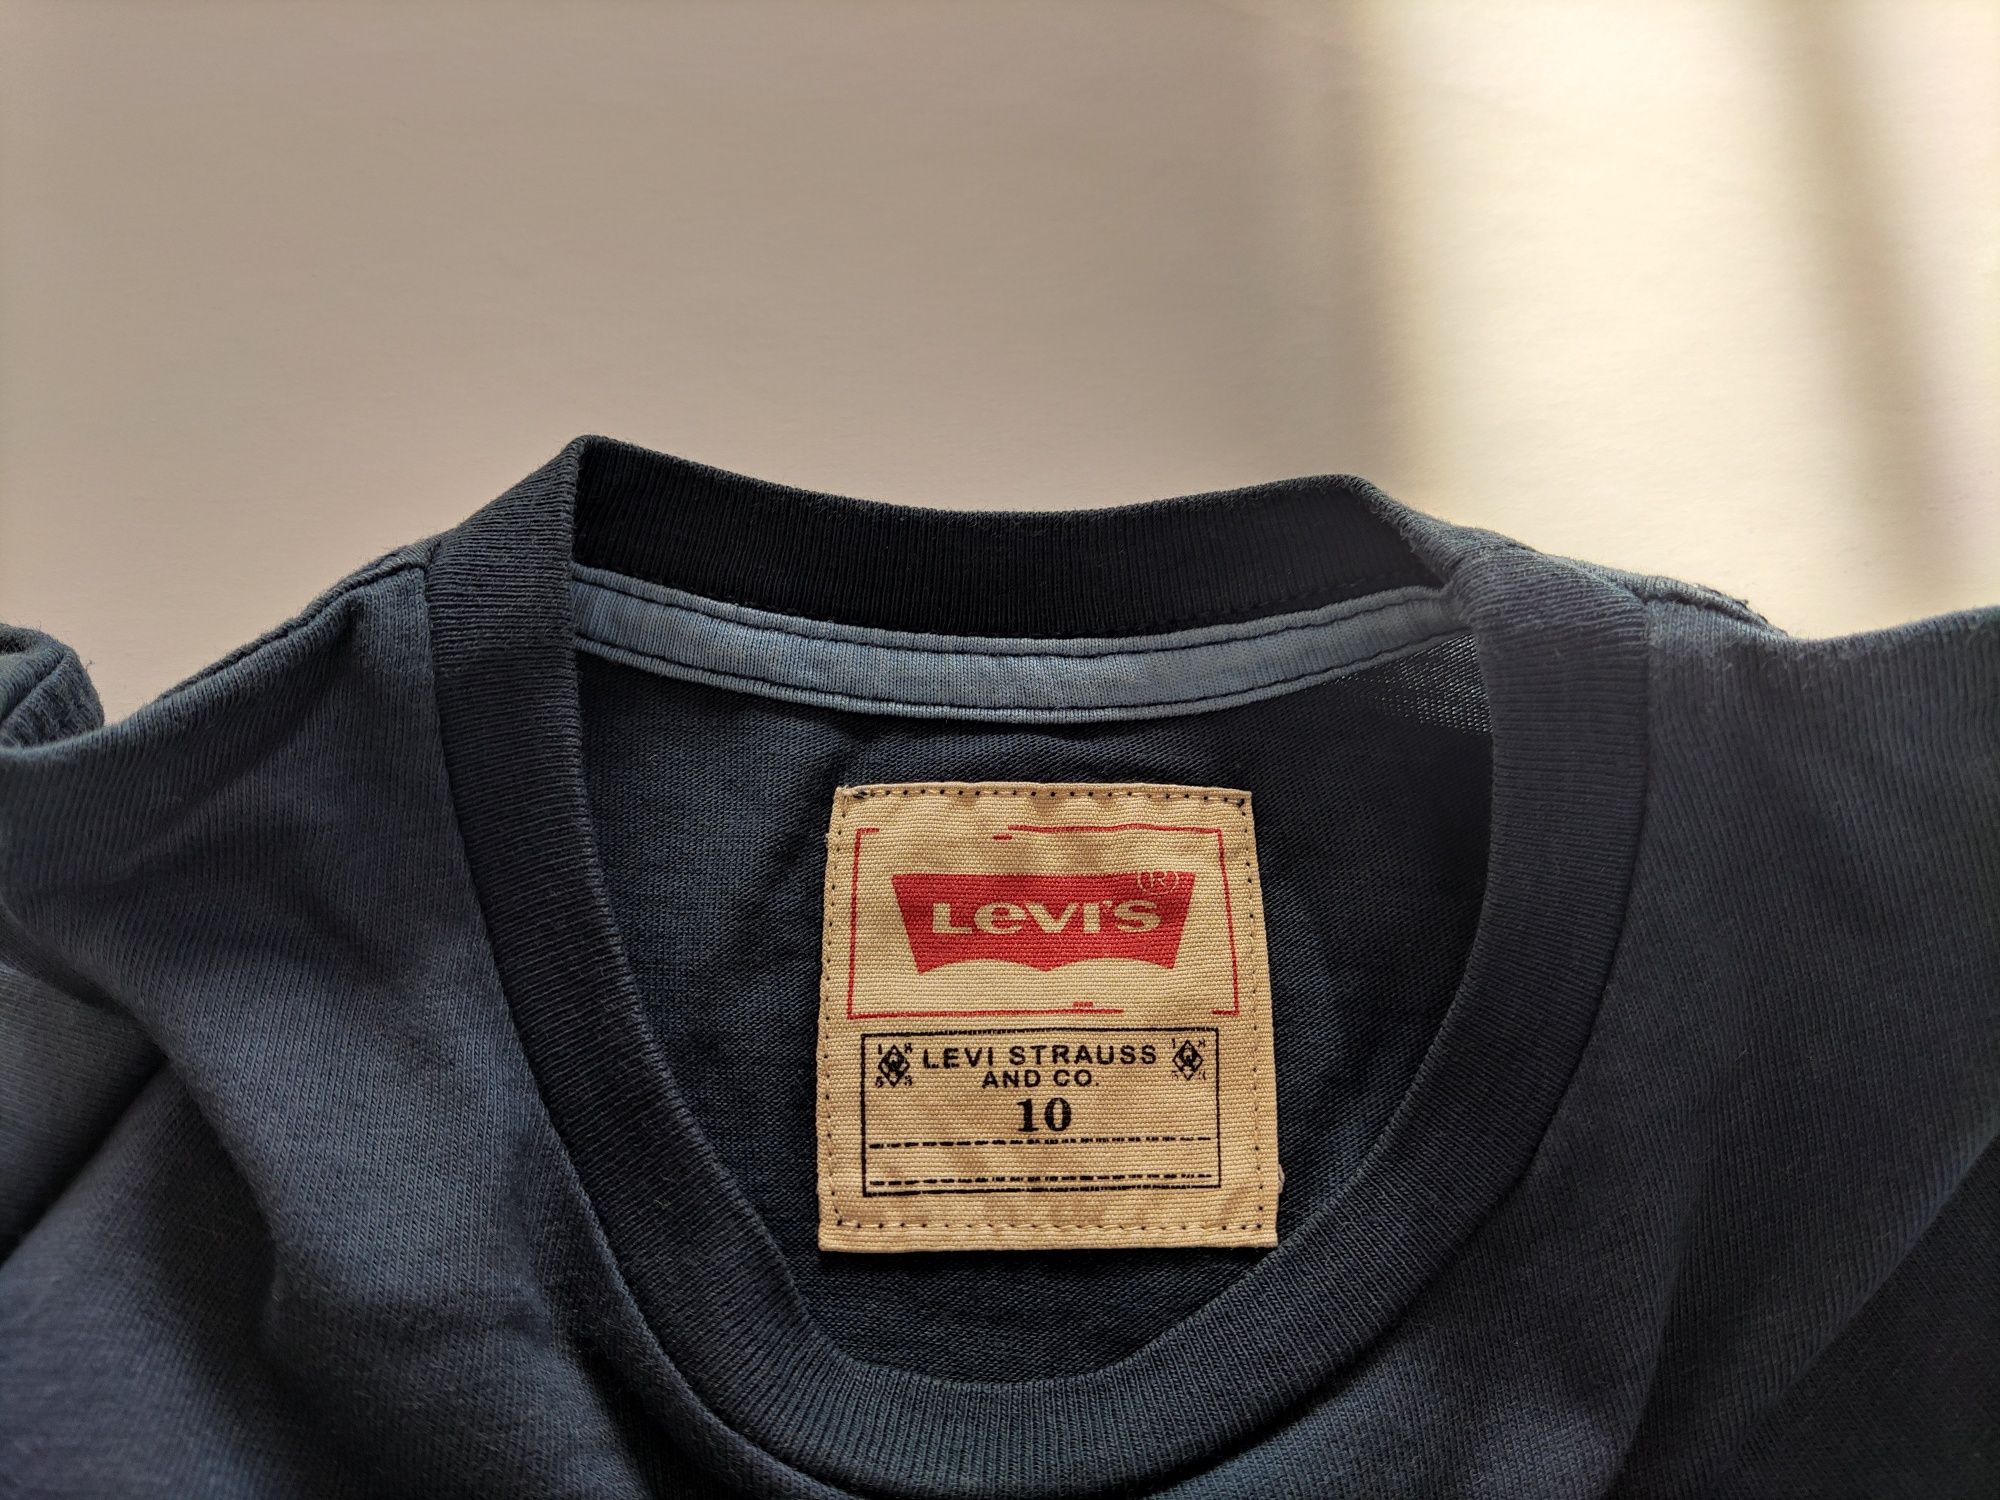 Sweats Levi's, Hugo boss e Polo Ralph Lauren